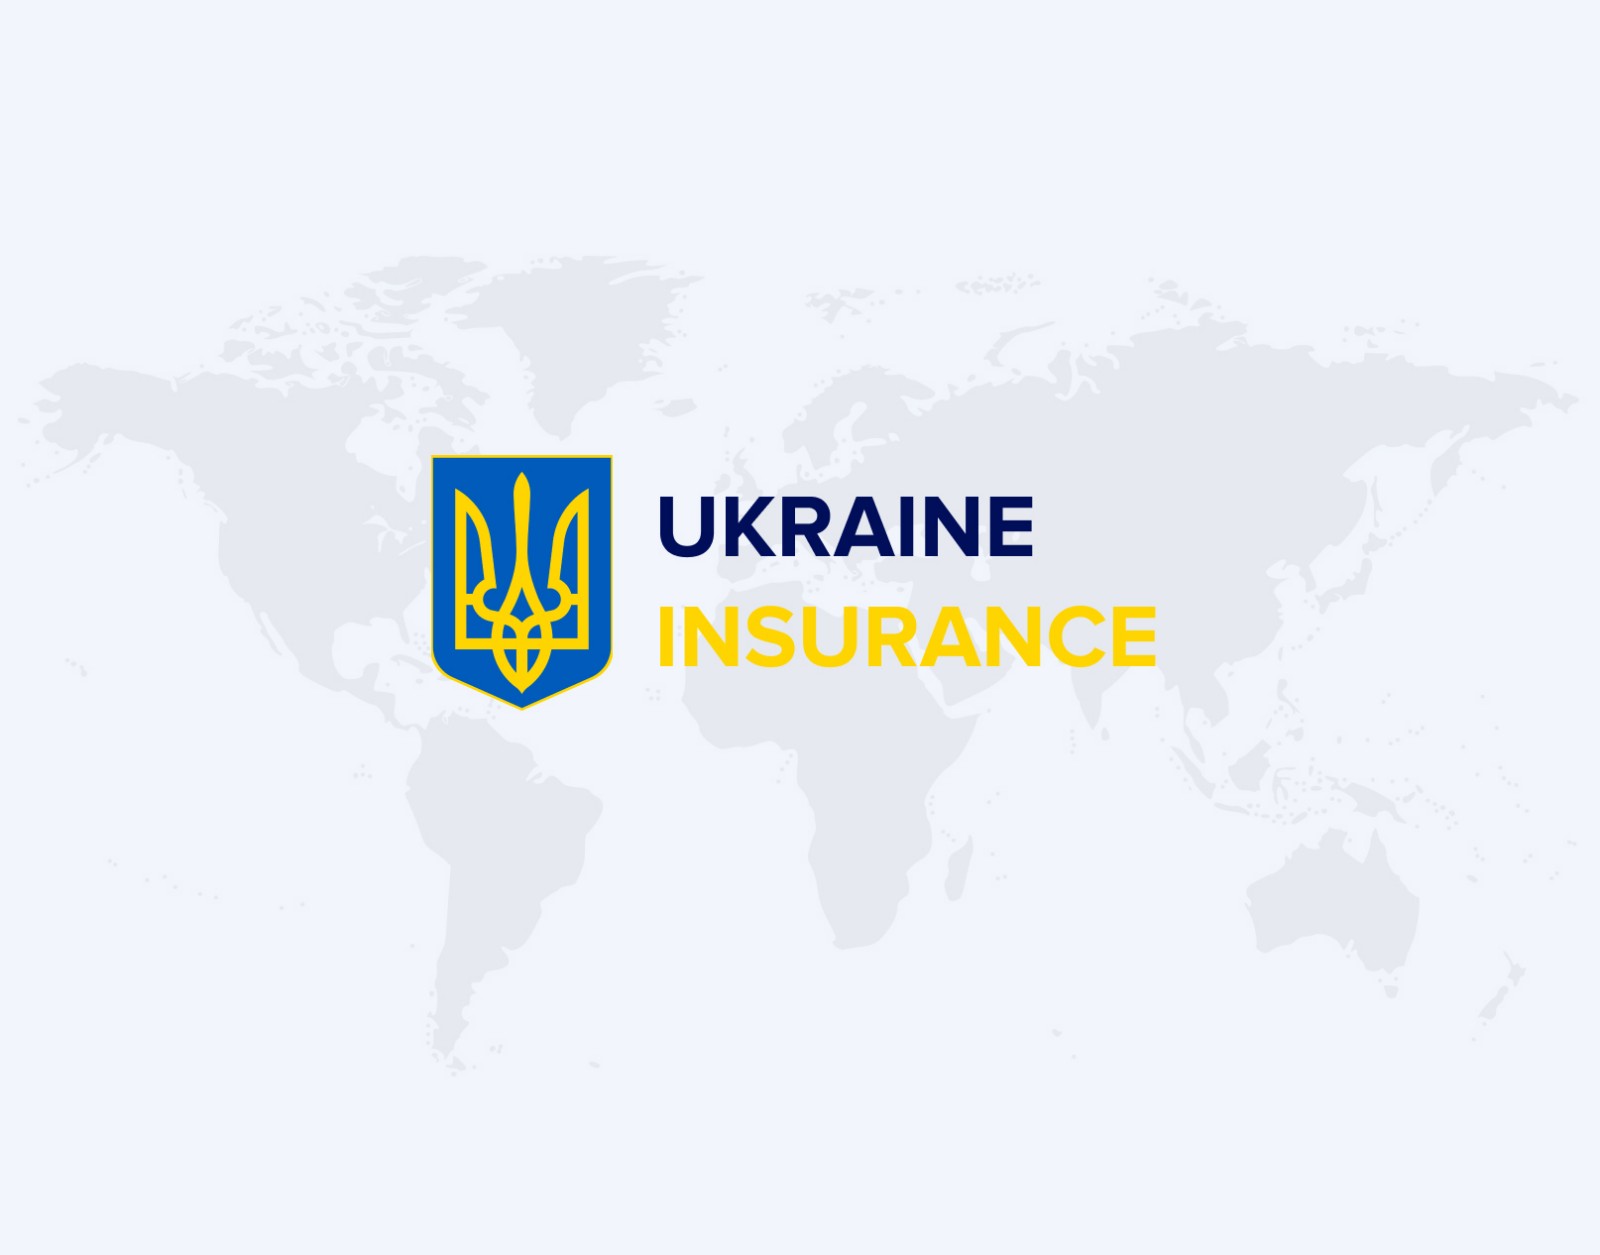 Insurance Ukraine